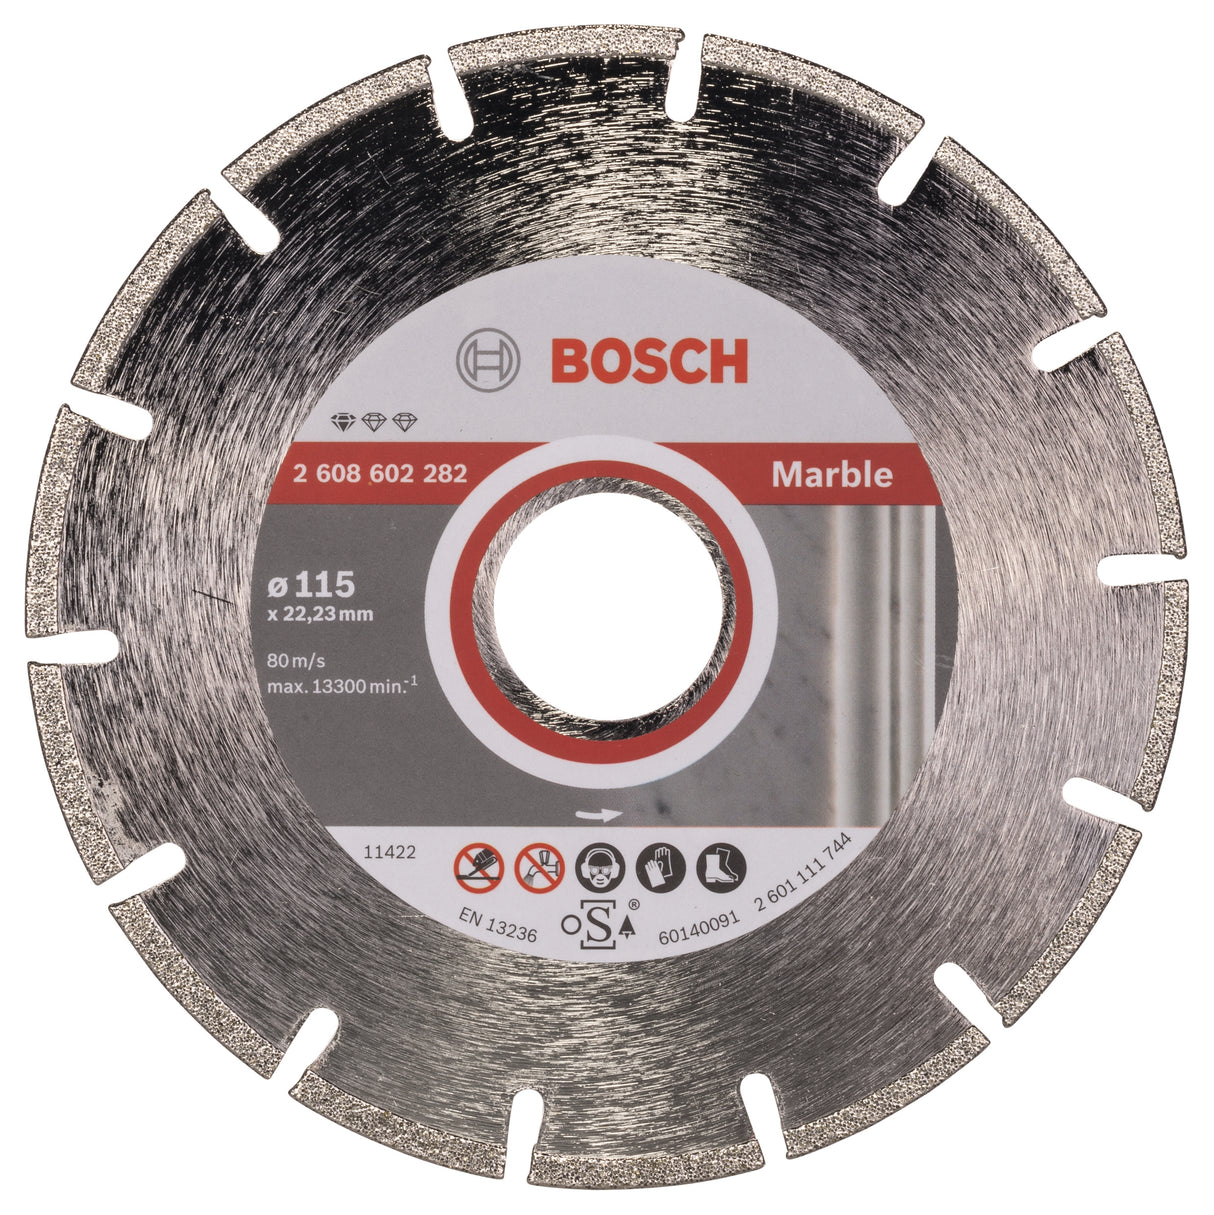 Bosch Professional Diamond Cutting Disc for Marble - 115 x 22.23 x 2.2 x 3mm Standard